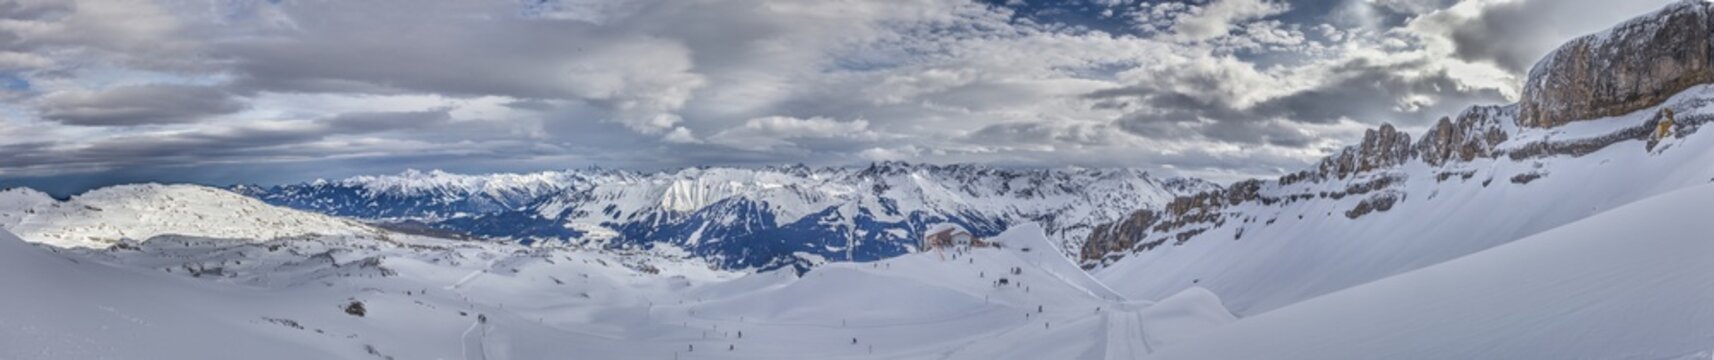 Panoramic image of a ski slope in Ifen ski resort in Kleinwalsertal valley in Austria